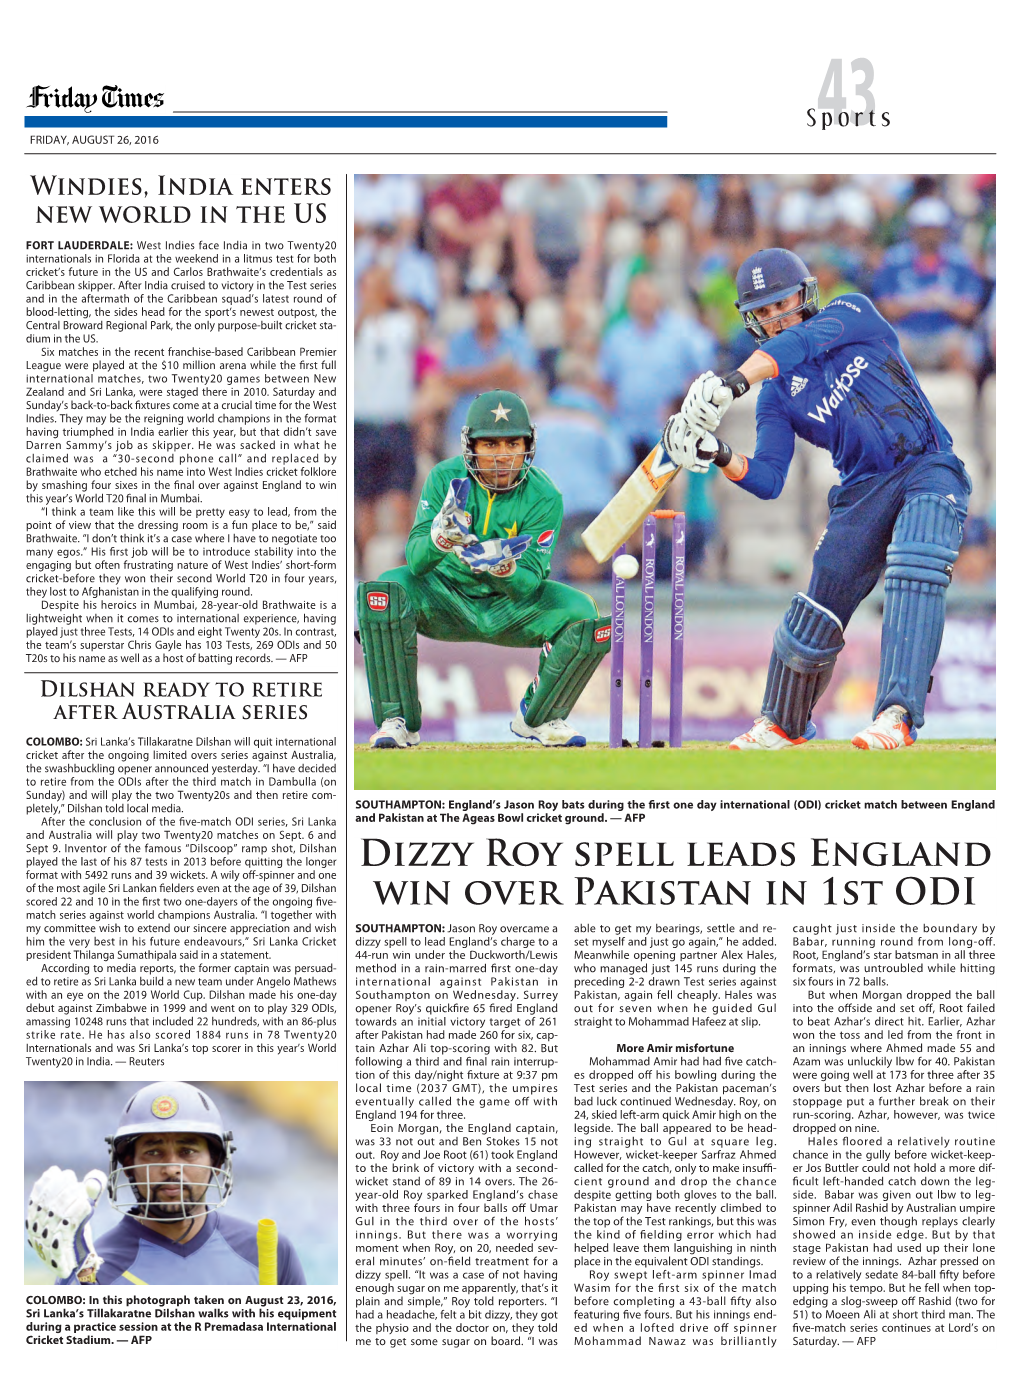 Dizzy Roy Spell Leads England Win Over Pakistan in 1St